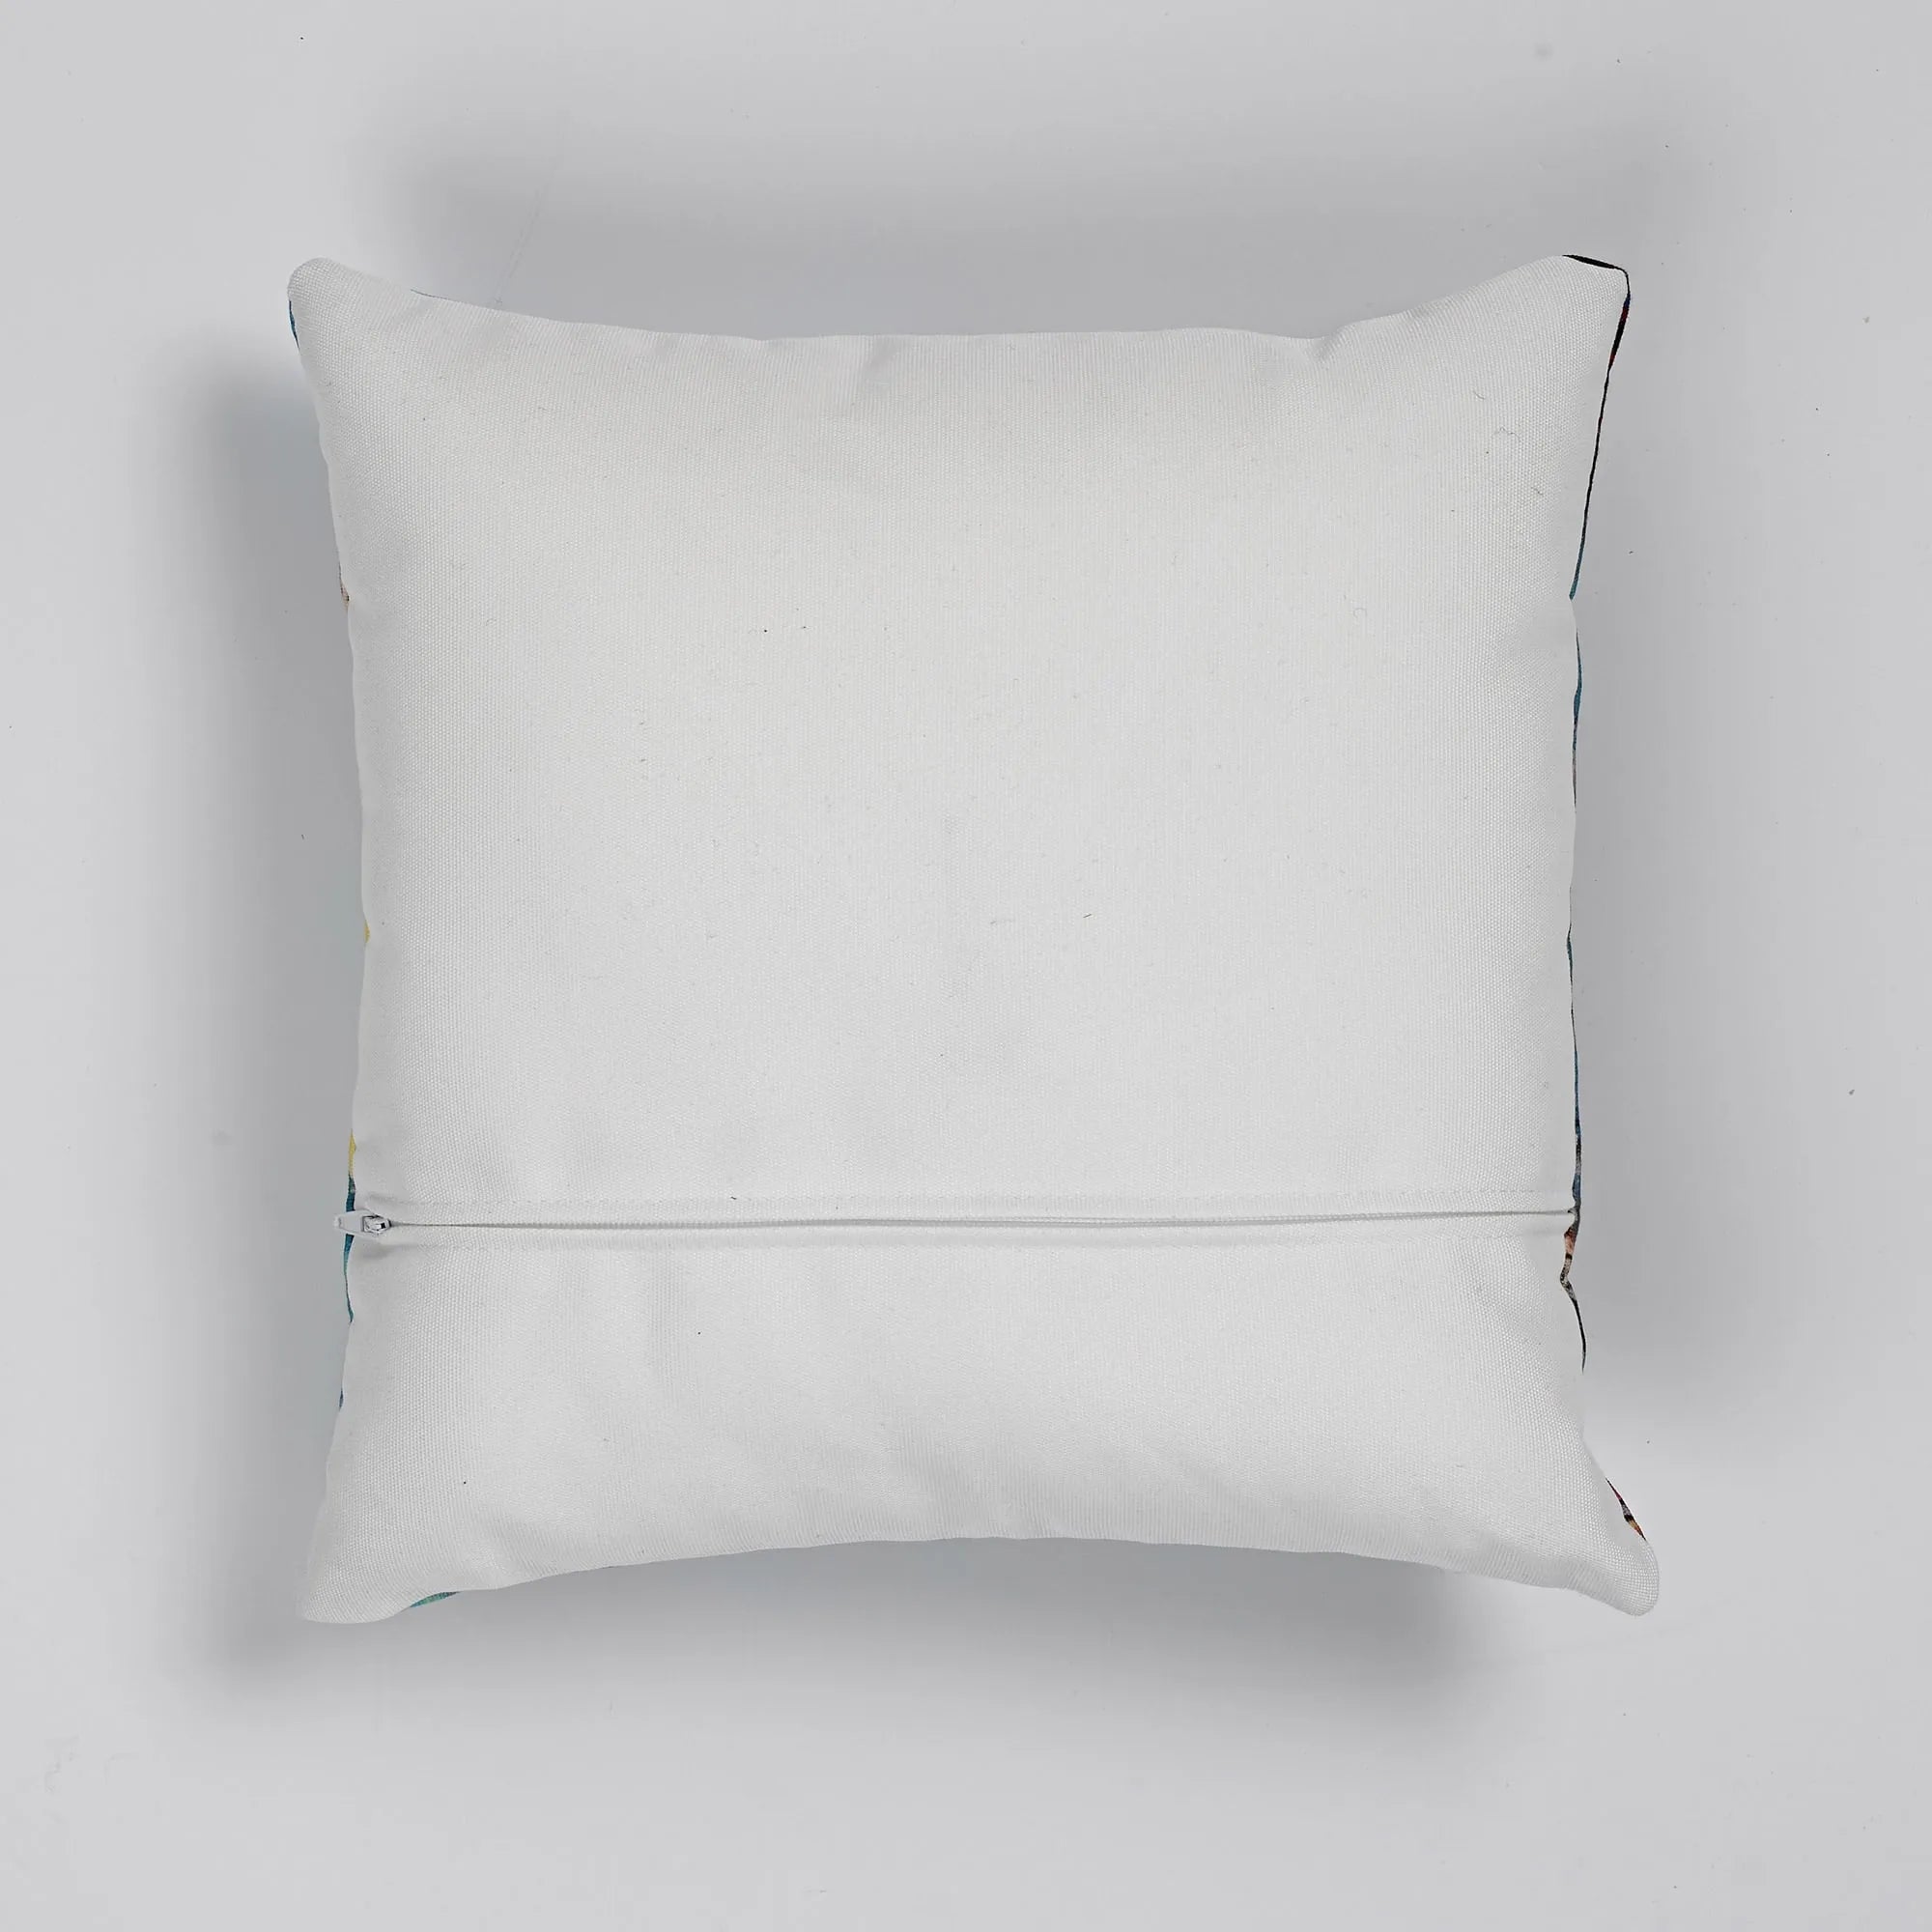 Snakeshead - William Morris Cushion - Decorative Throw Pillow - Throw Pillows - Aesthetic Art